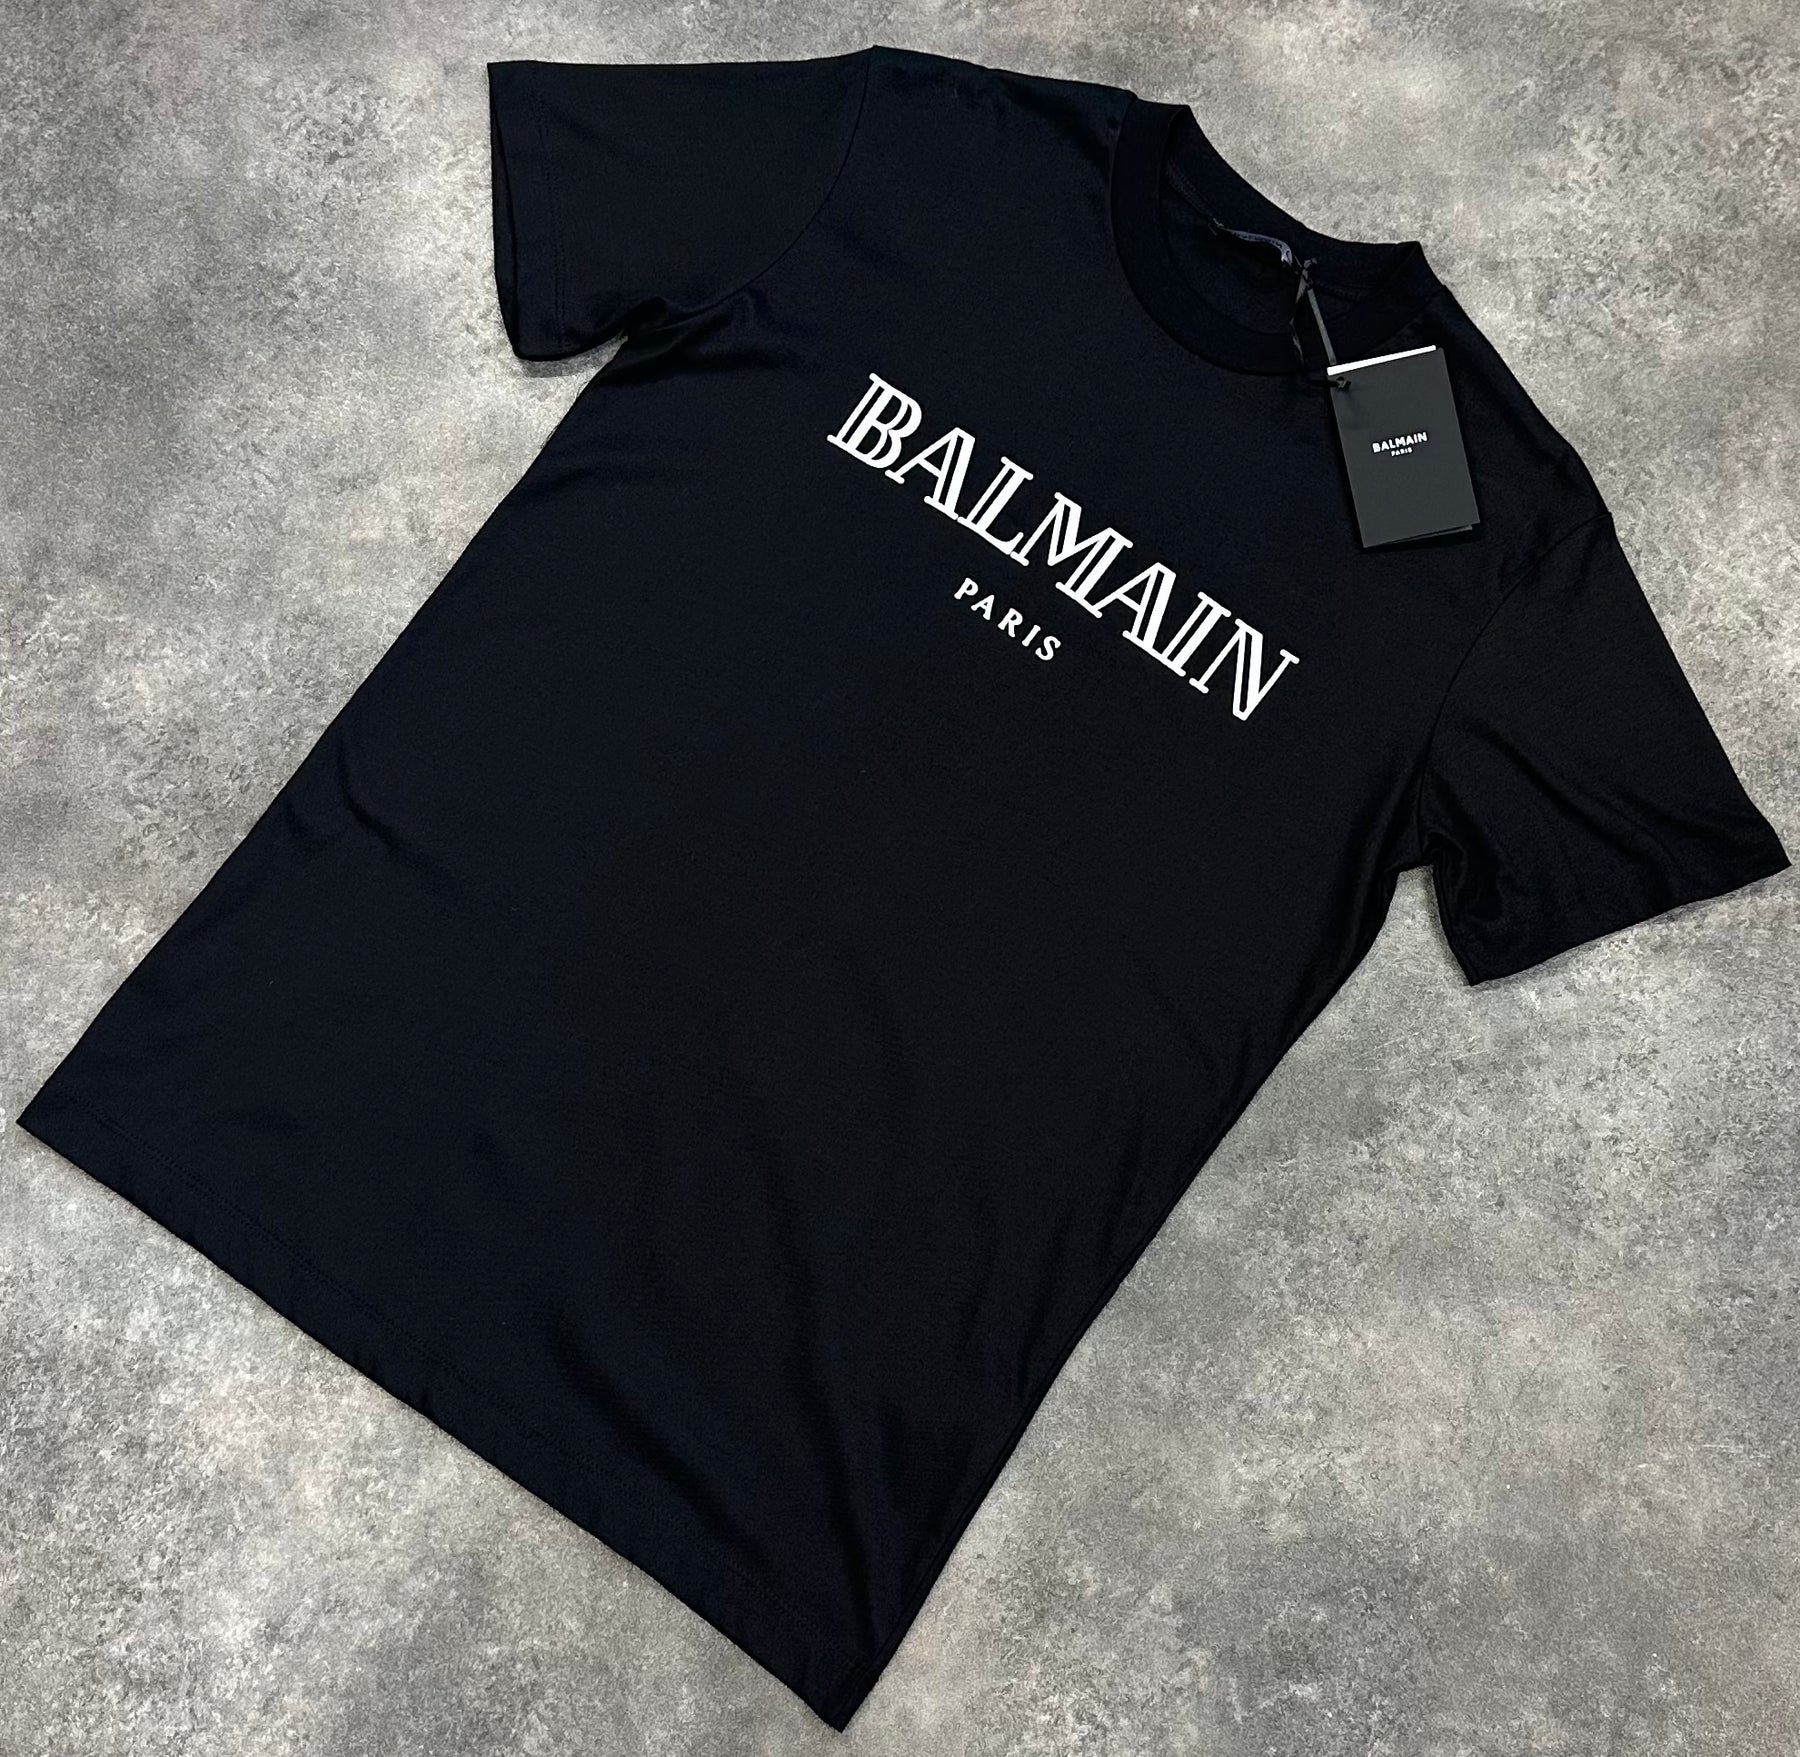 BALMAIN PARIS VINTAGE LOGO T-SHIRT BLACK